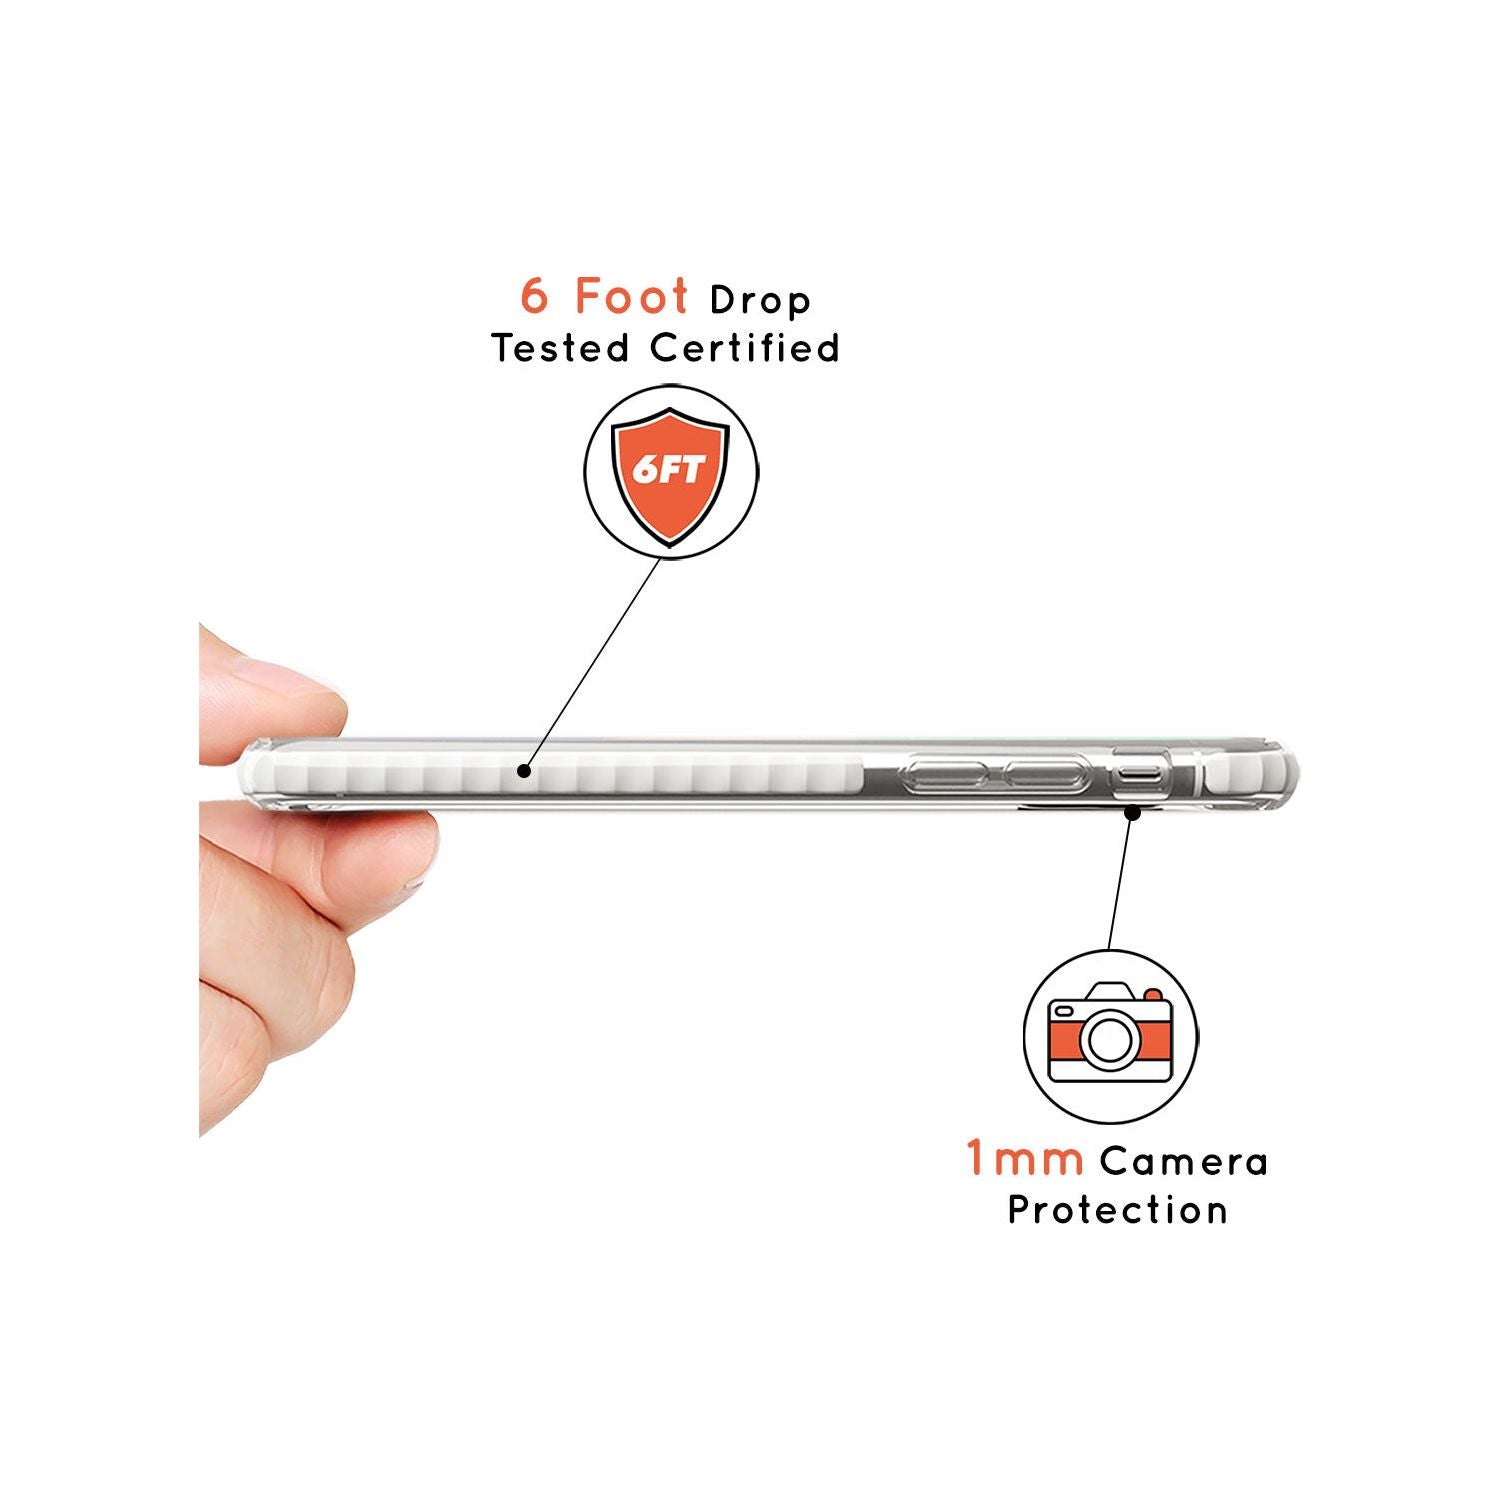 Large Rainbow Mandala Transparent Design Slim TPU Phone Case for iPhone 11 Pro Max